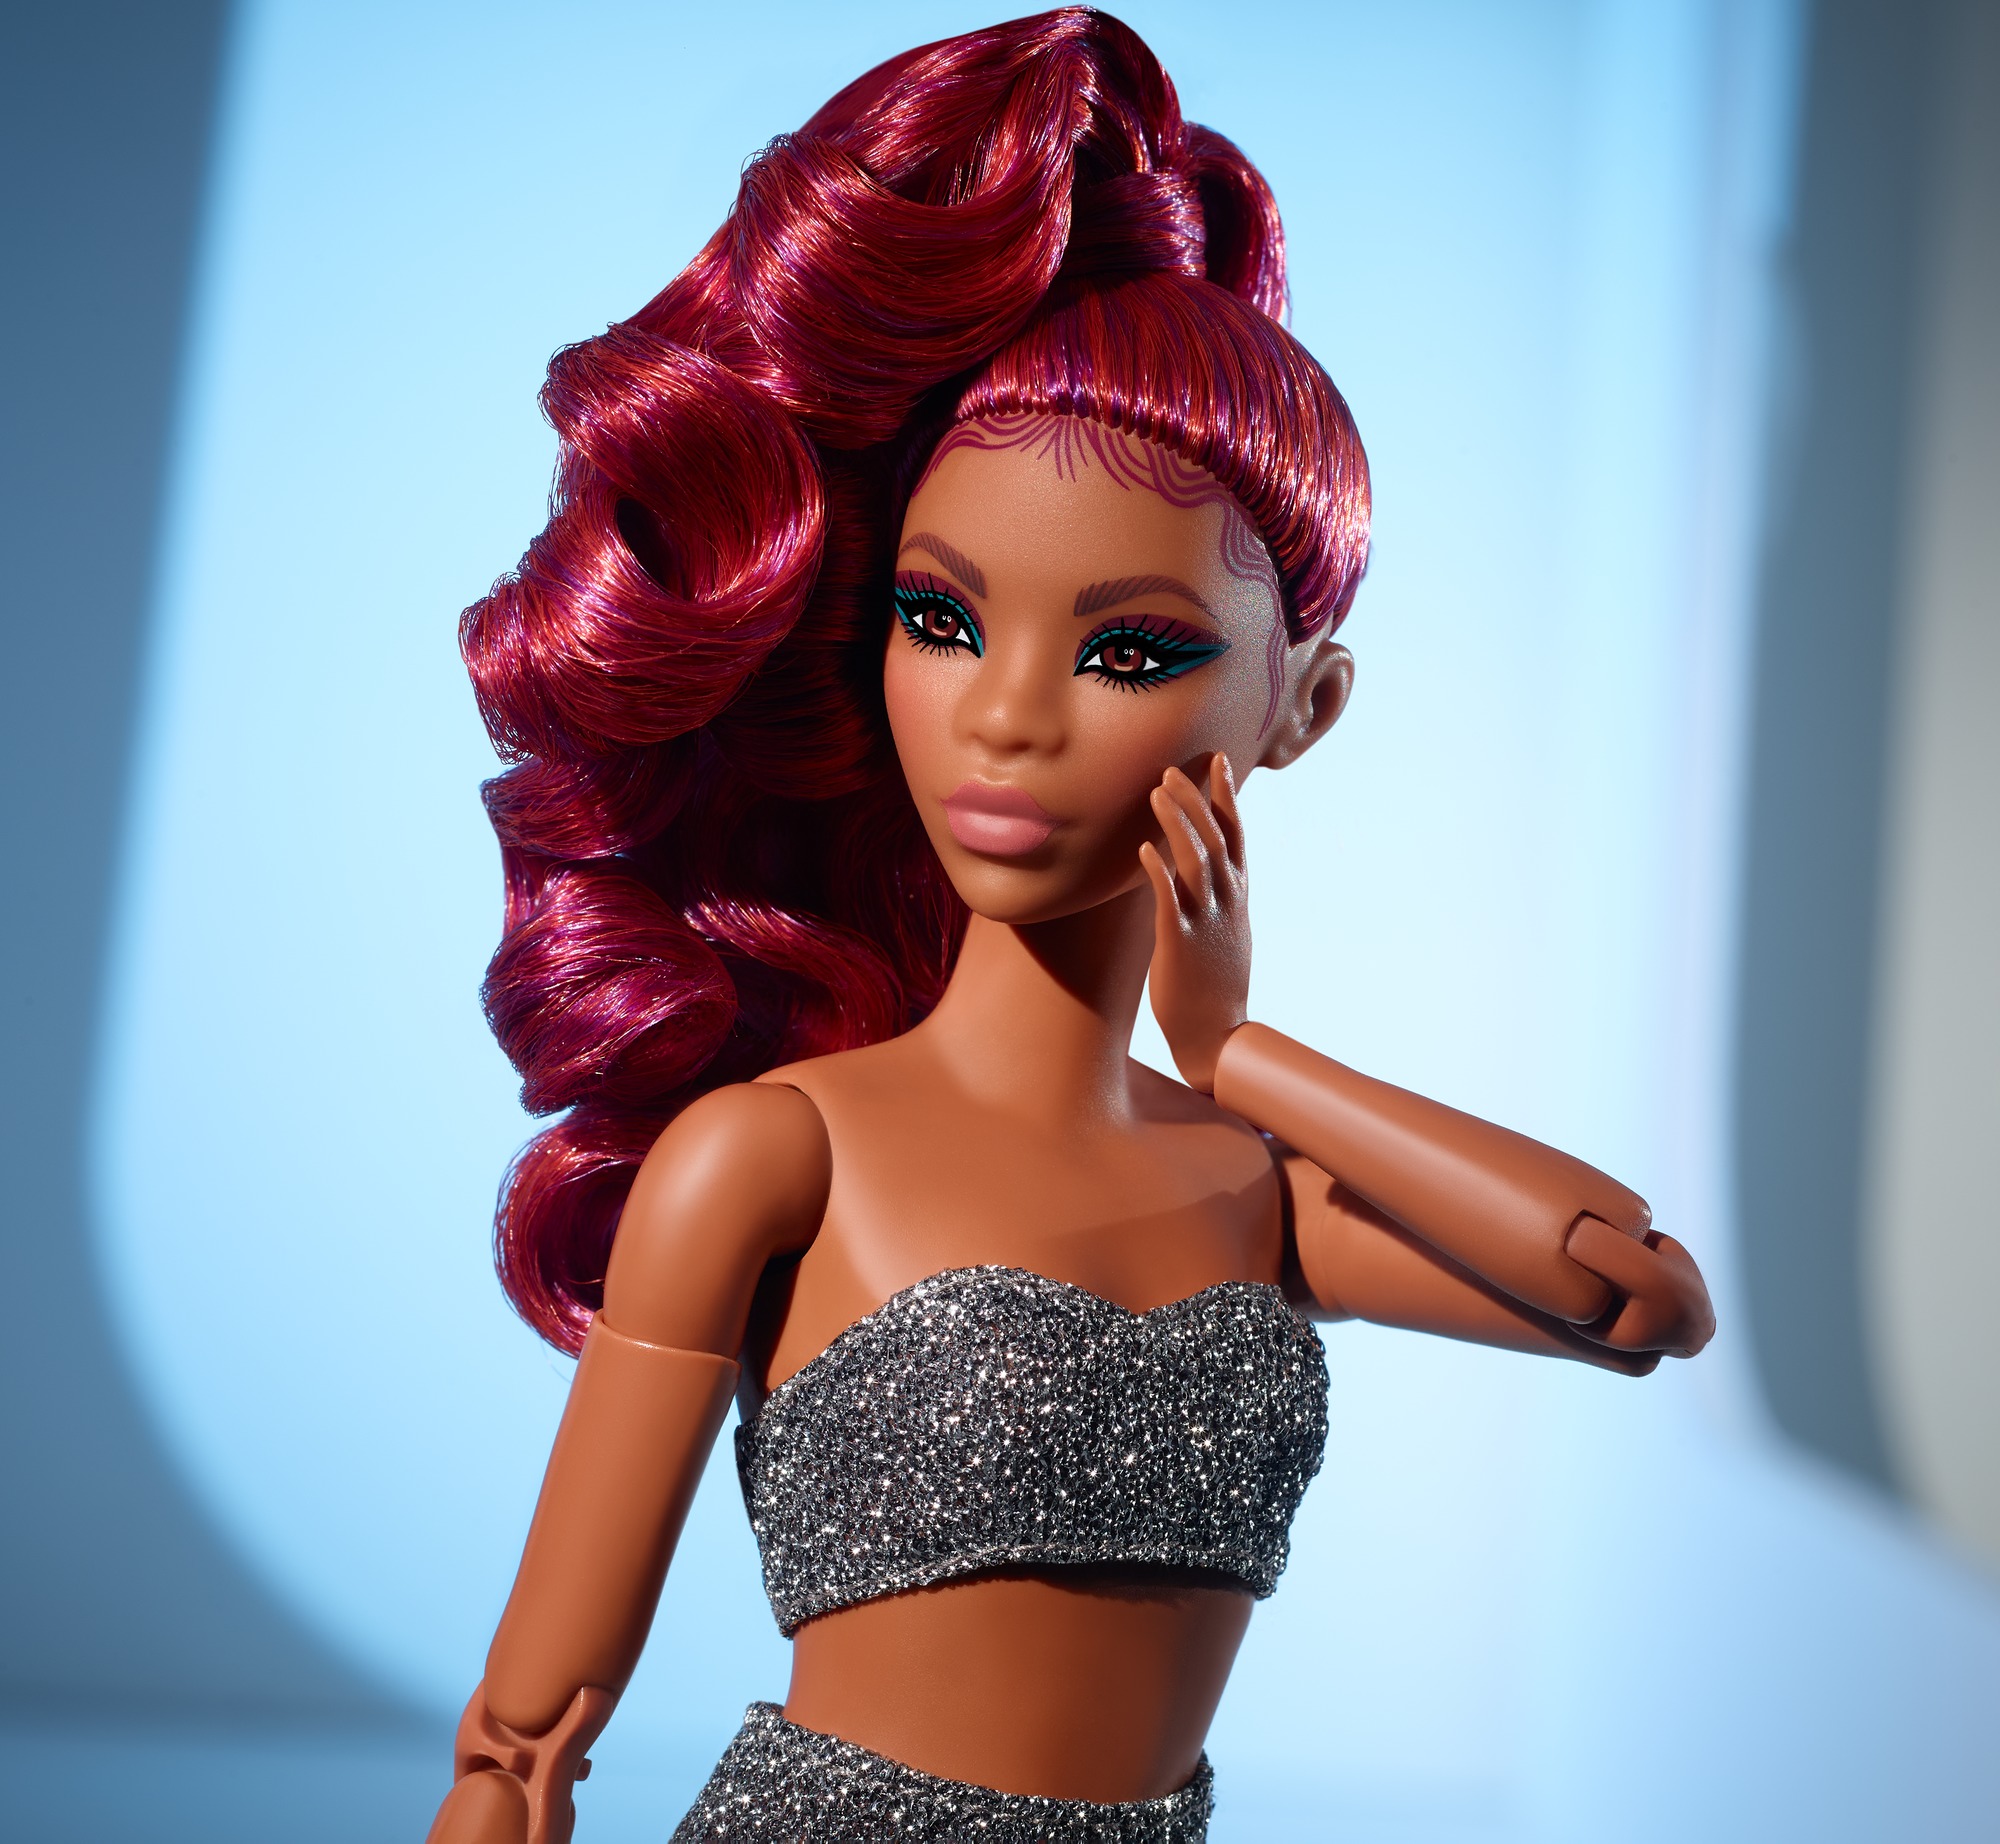 Red headed barbie